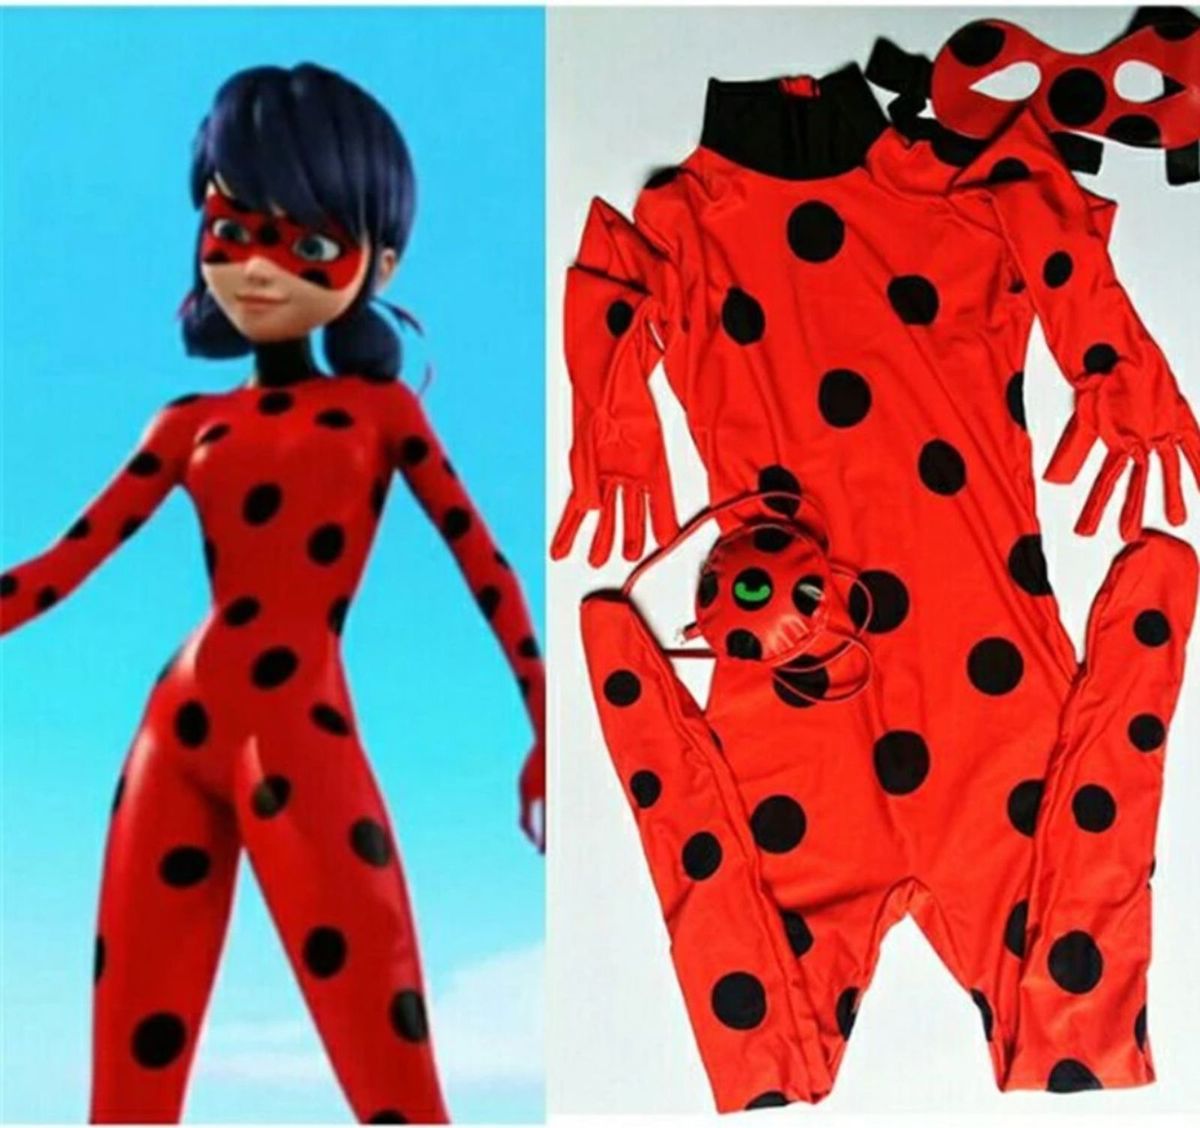 roupa da ladybug infantil